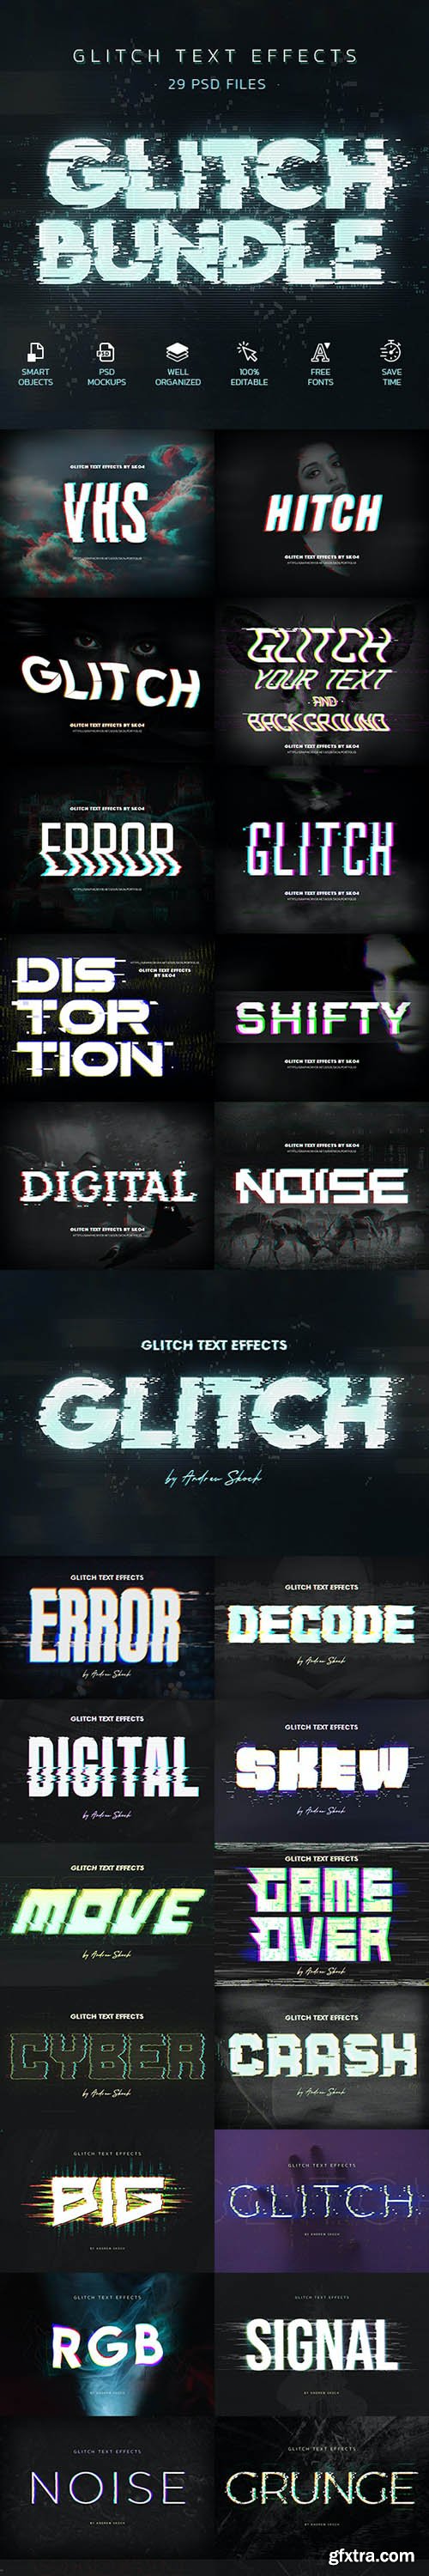 GraphicRiver - Glitch Effects Bundle 29750877